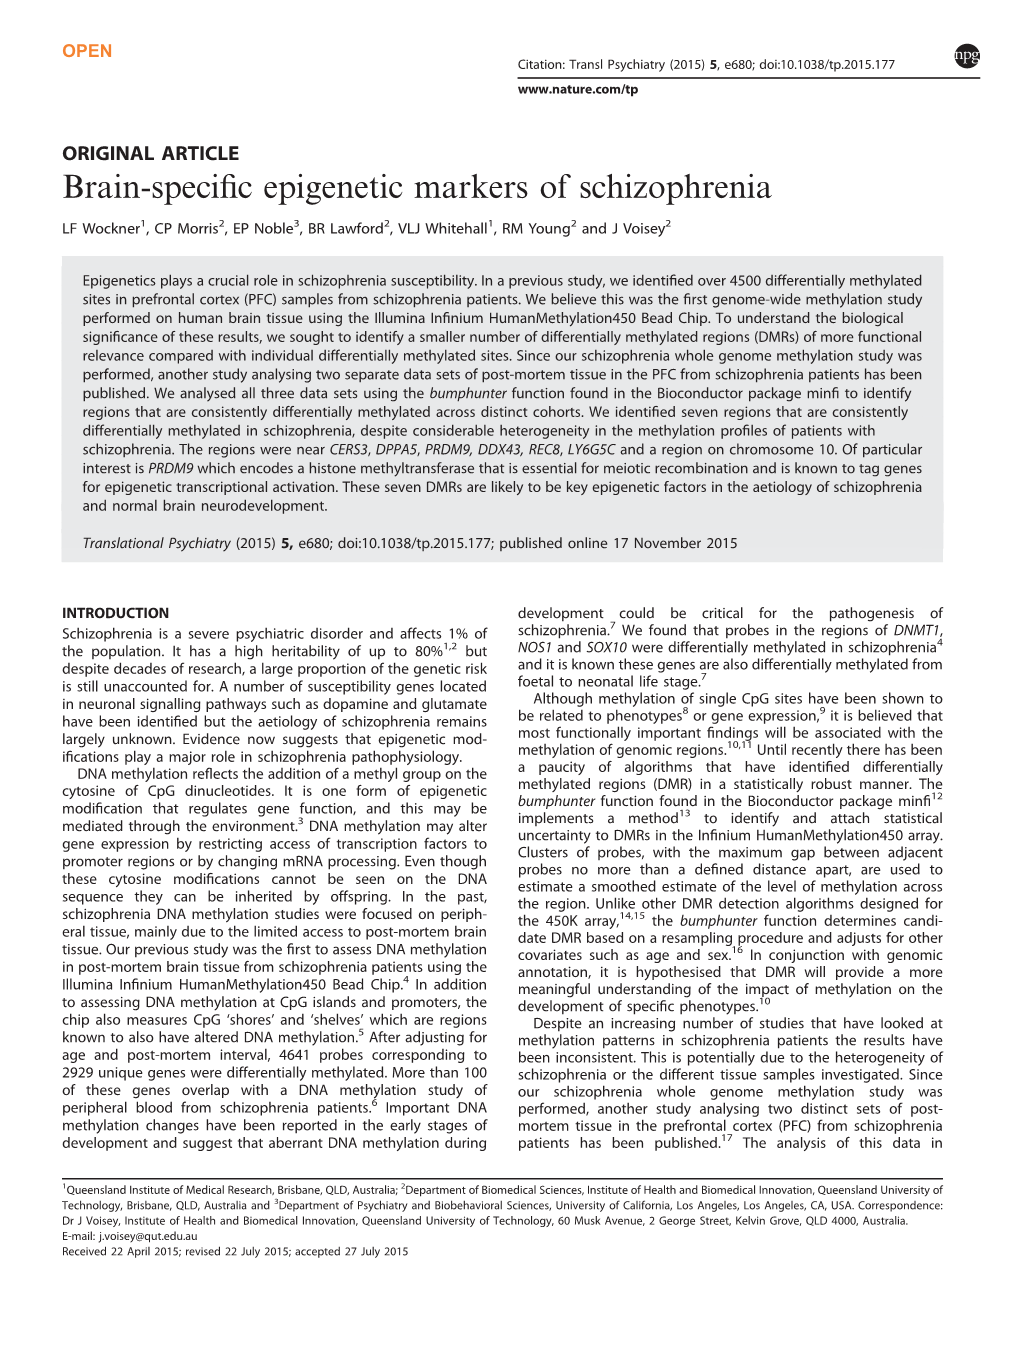 Brain-Specific Epigenetic Markers of Schizophrenia